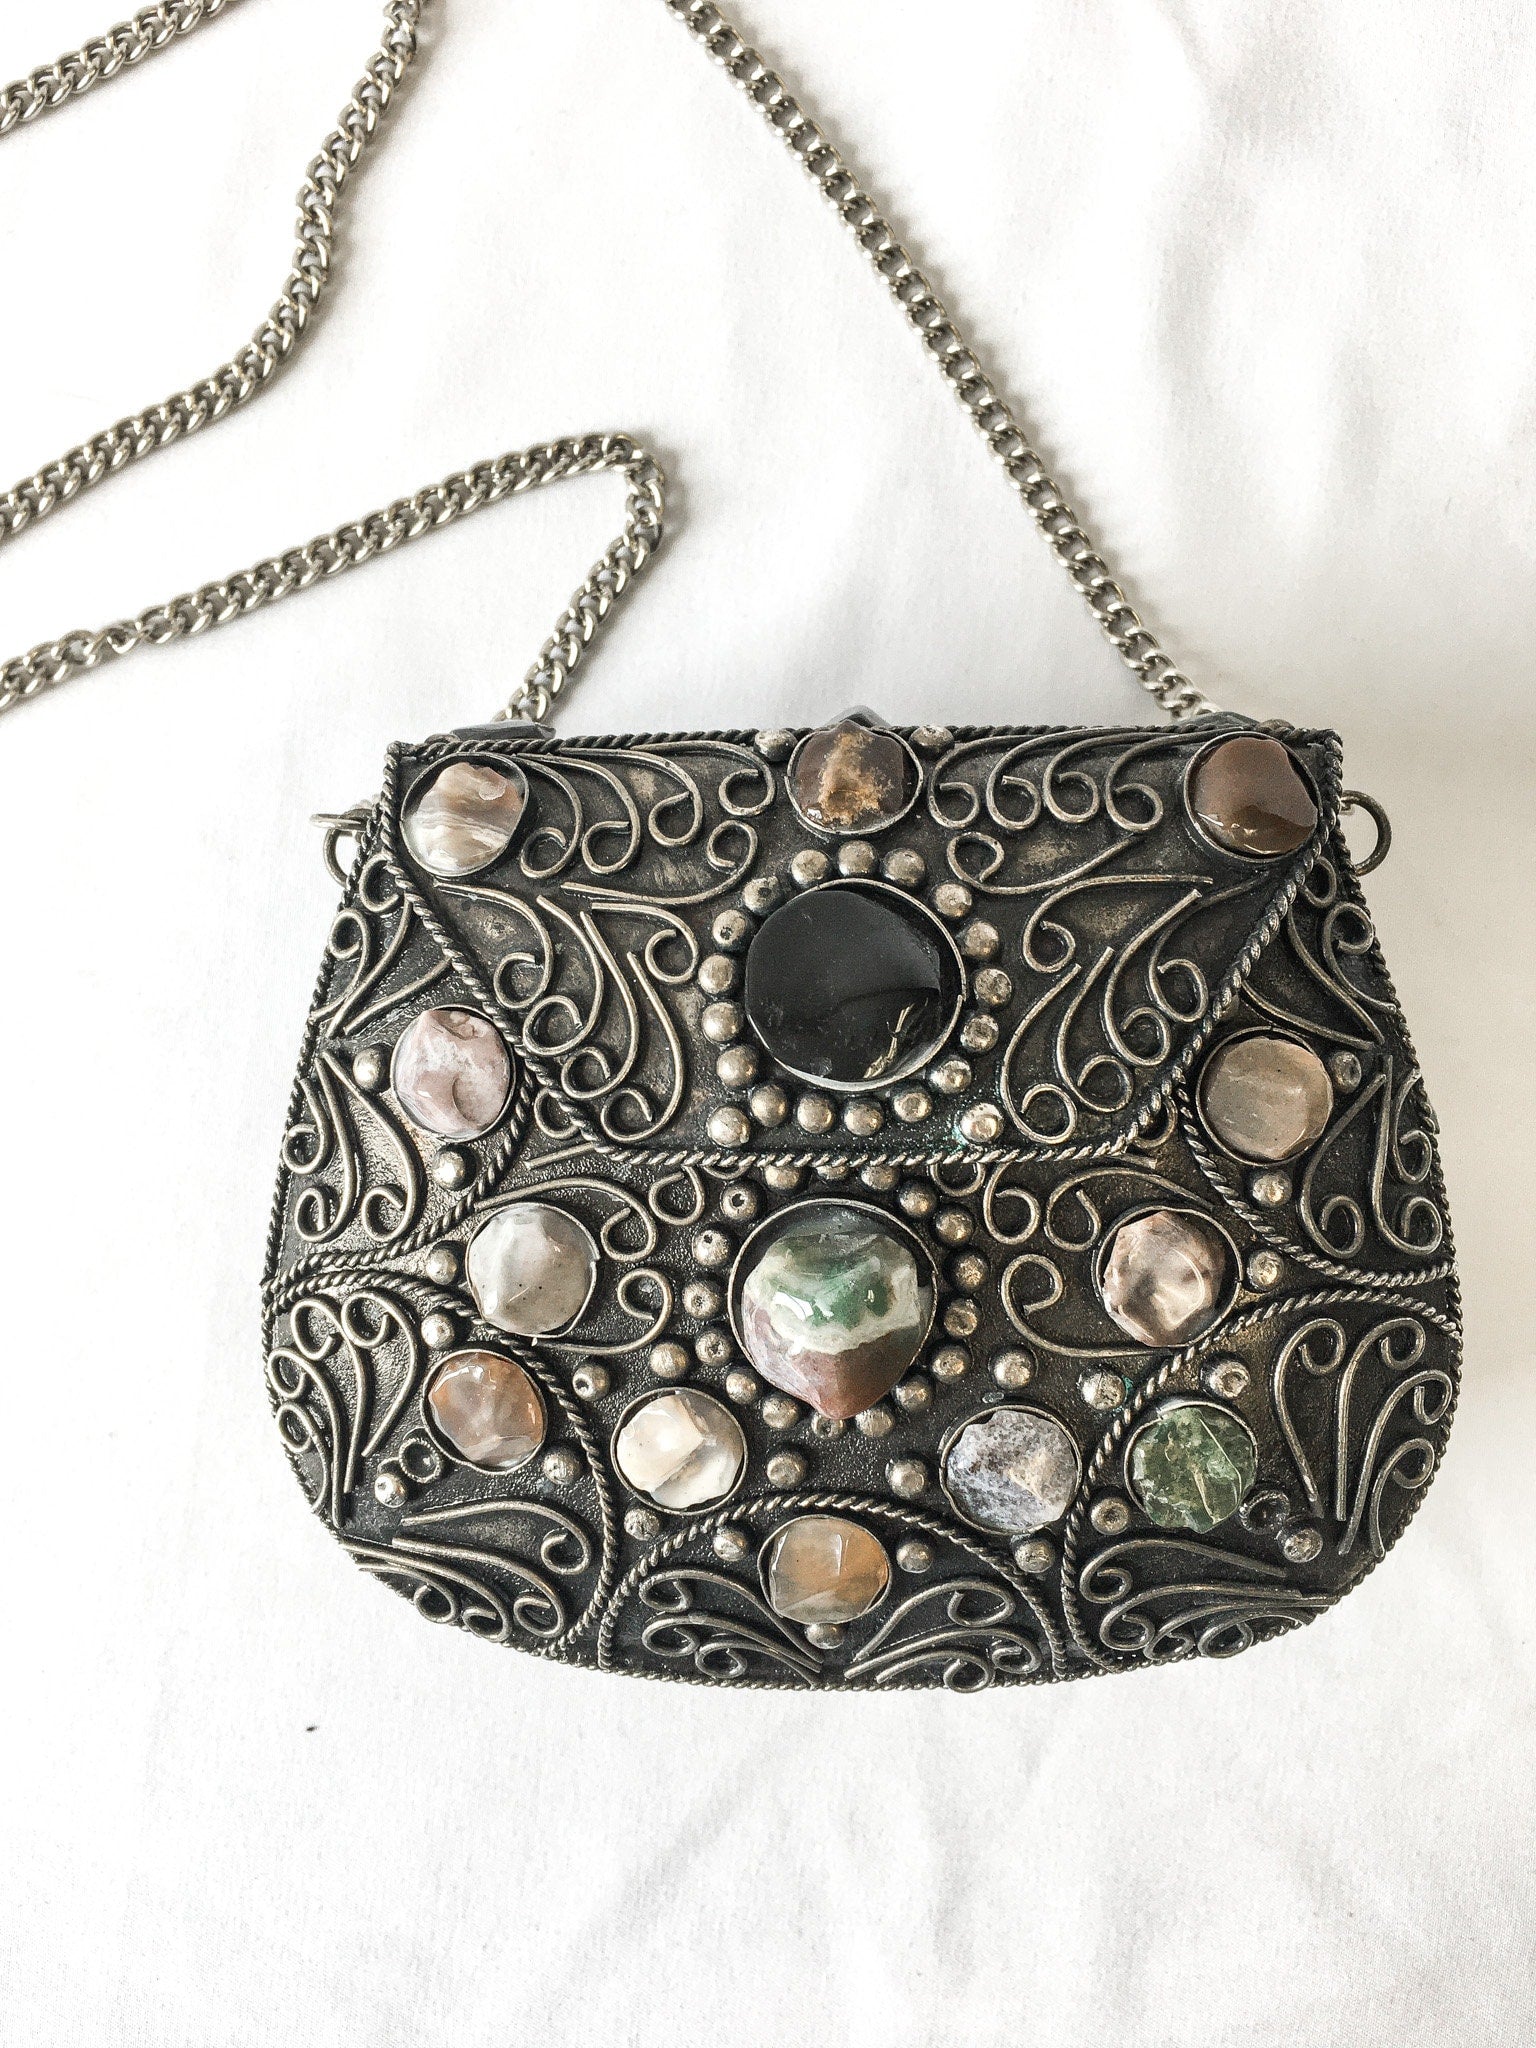 Vintage Sajai Metal Purse with Natural Agate Stones and Chain Strap, Unique Metal Handbag